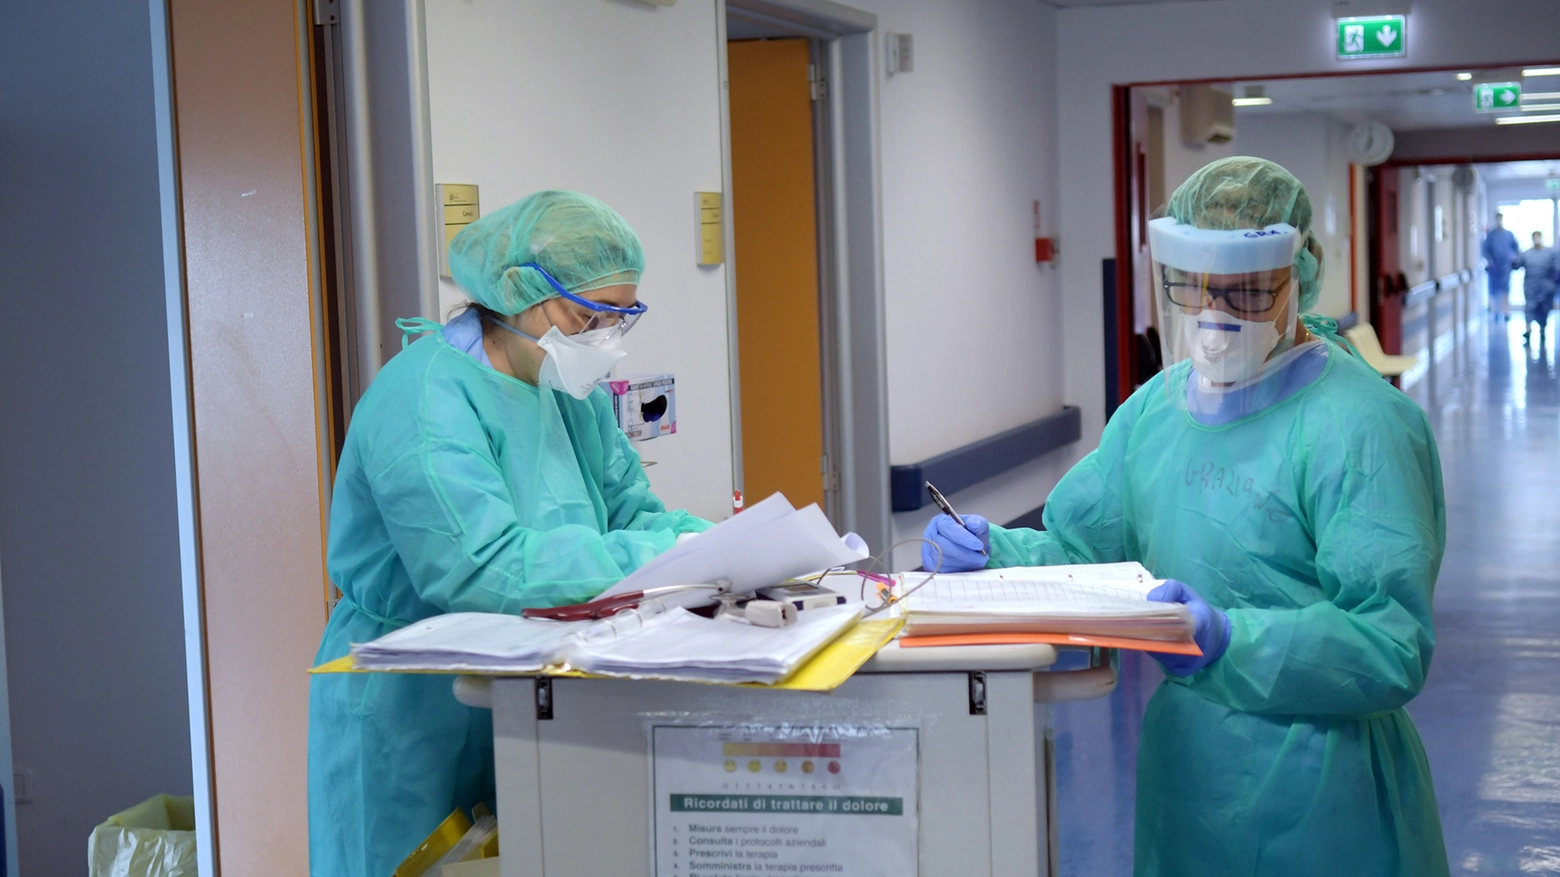 Coronavirus, medici al lavoro in ospedale (Ansa)